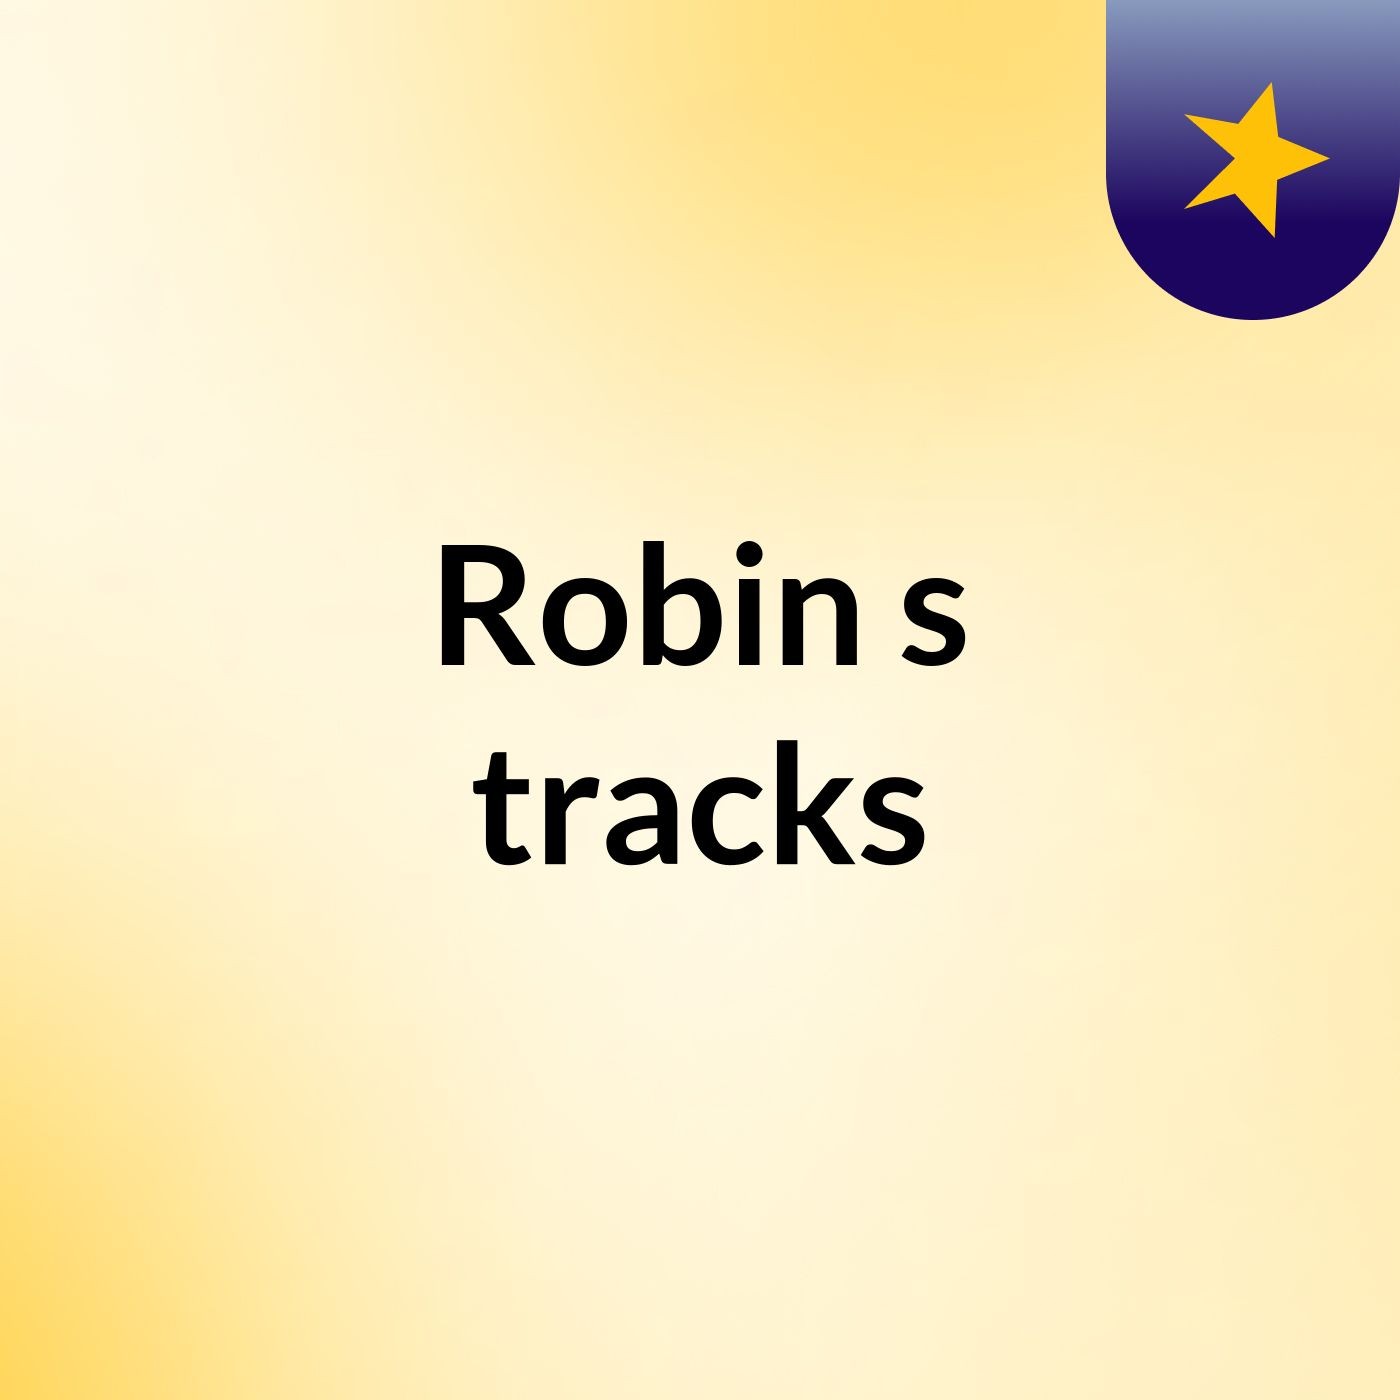 Robin's tracks